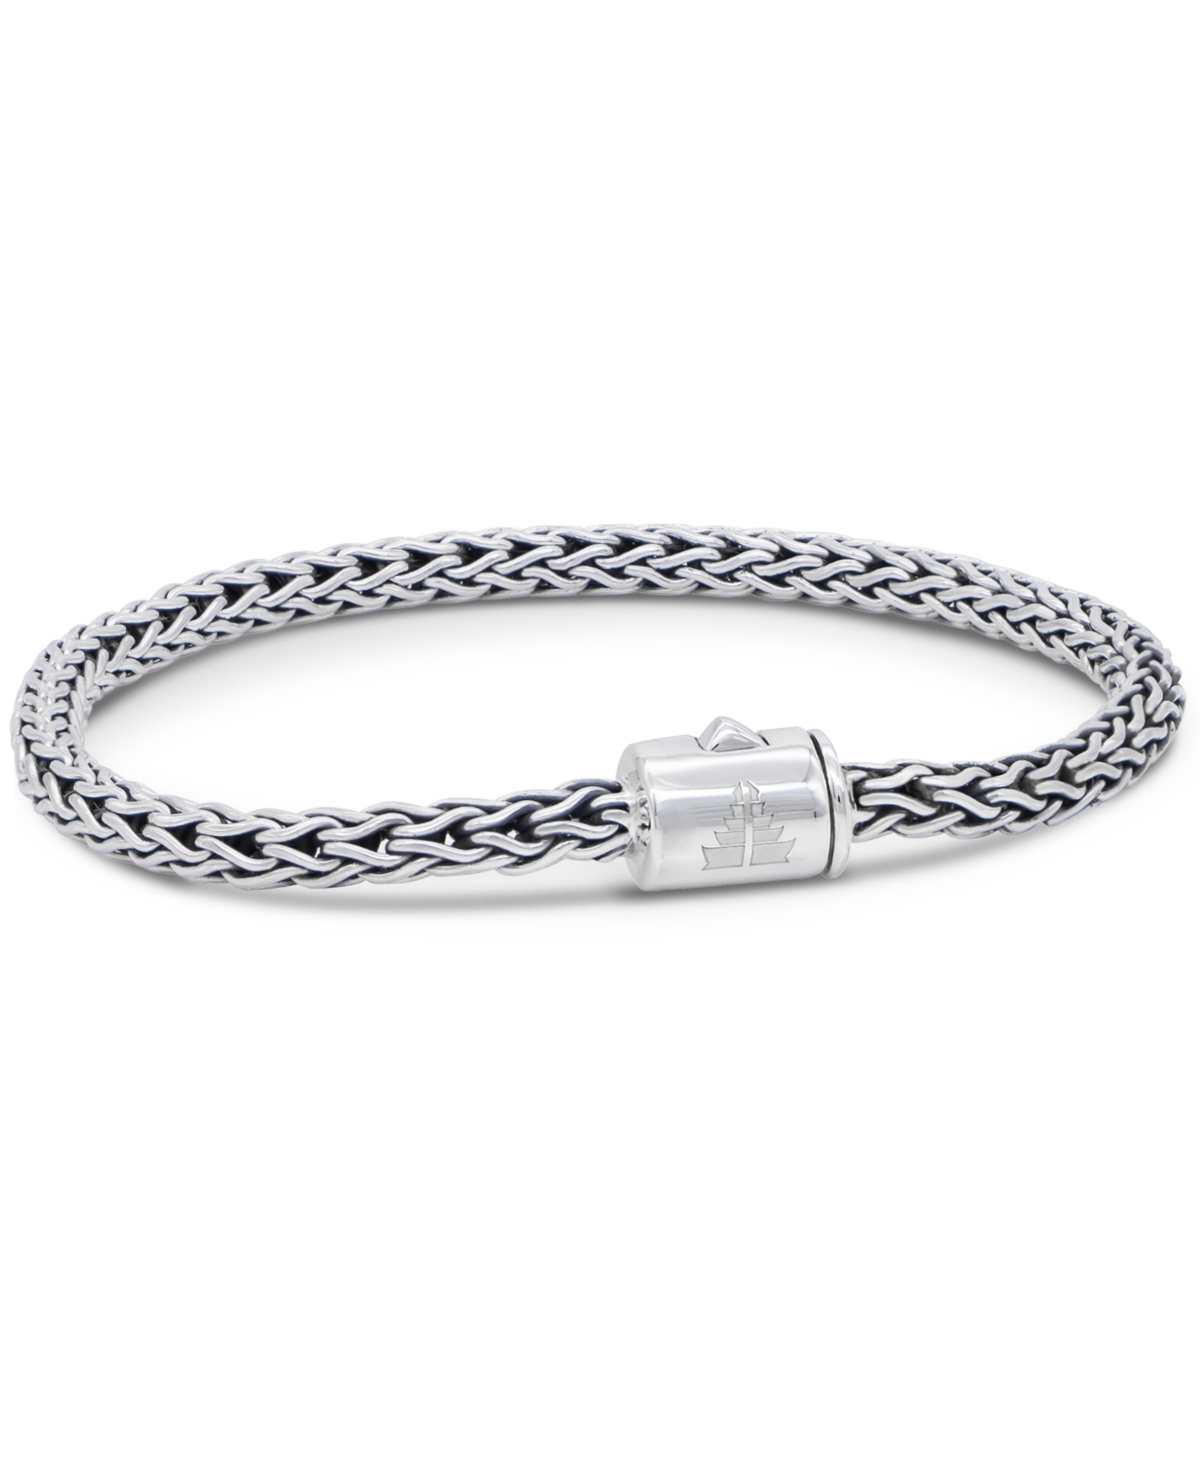 Dragon Bone Round 4mm Chain Bracelet in Sterling Silver - Silver